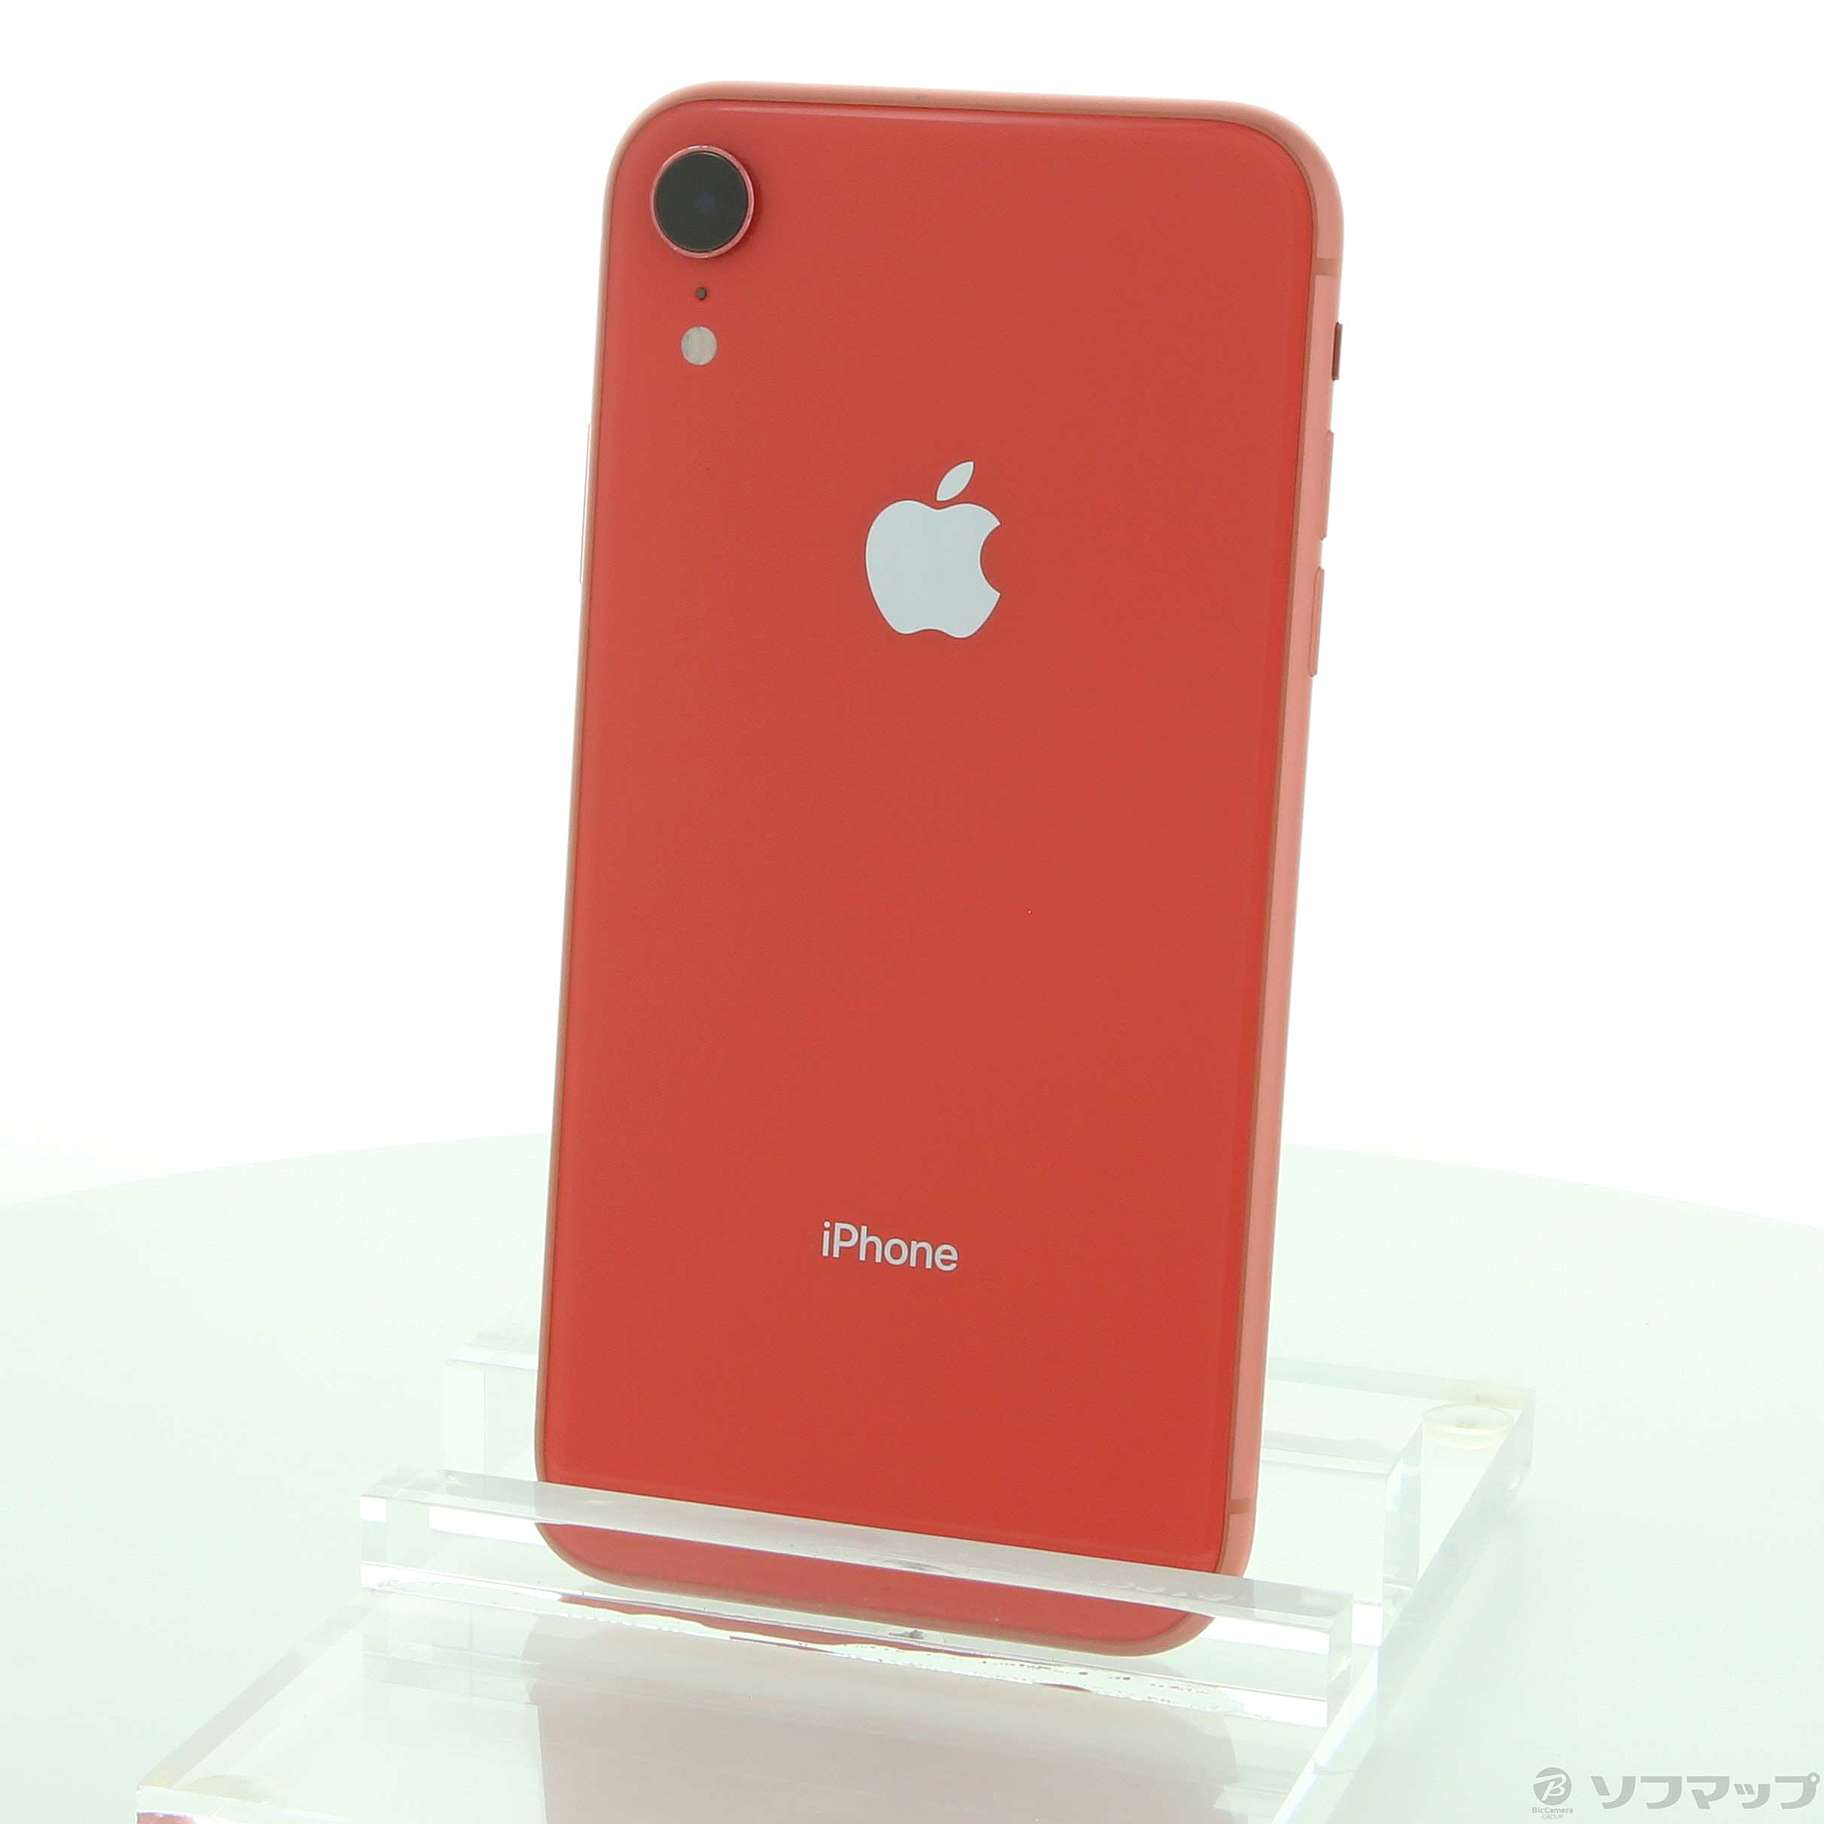 iPhone XR コーラル 64GB SIMフリー - tonosycolores.com